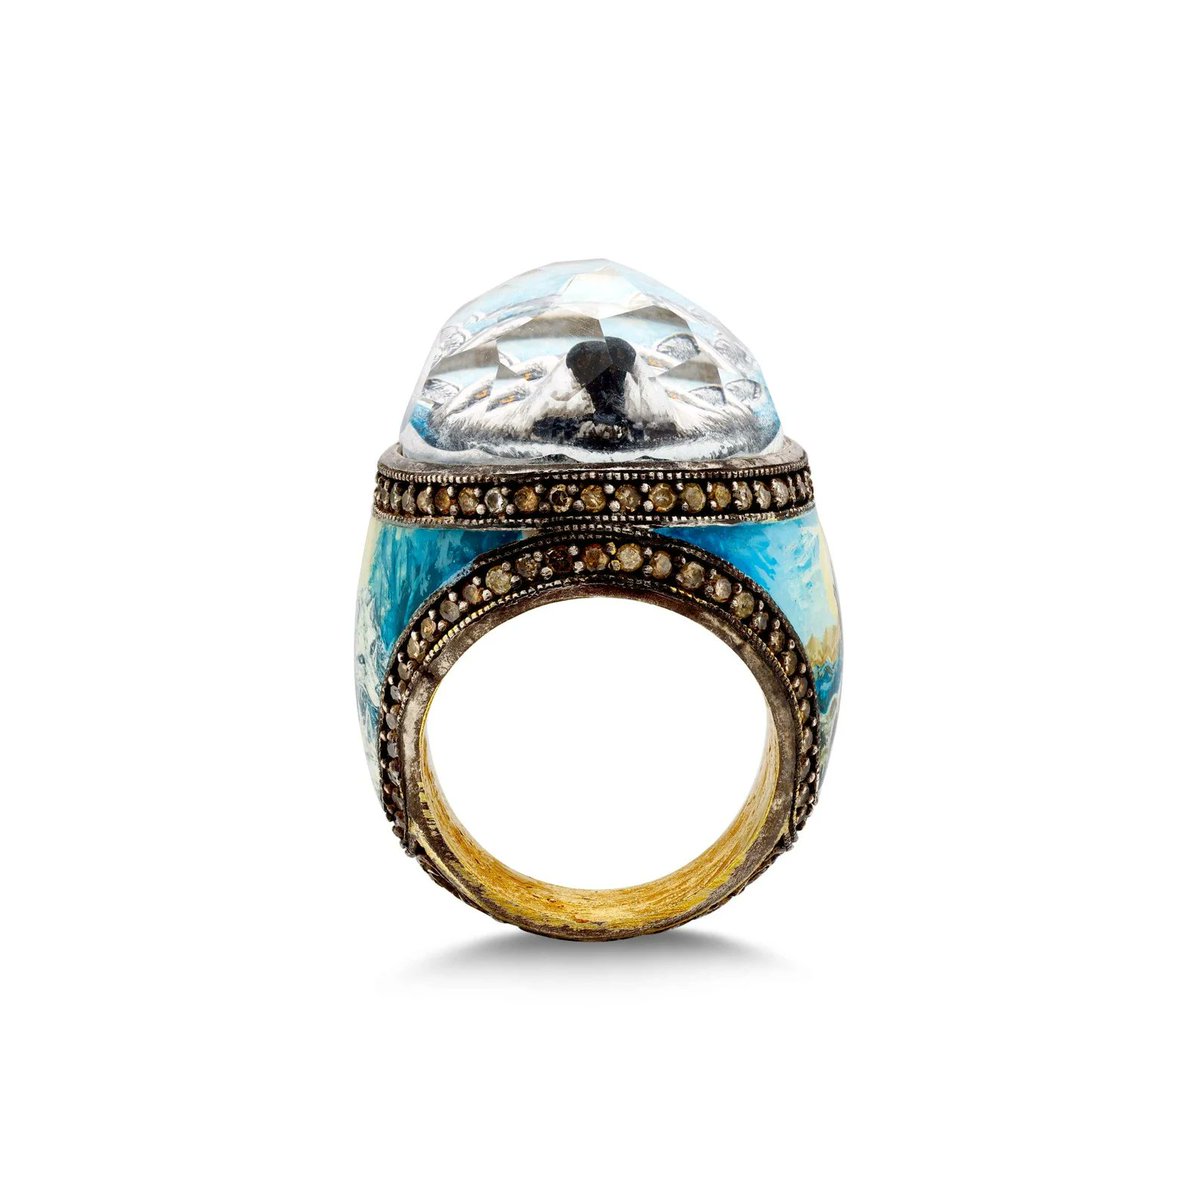 Black Diamonds Gray Wolf Ring, 24K Solid Gold Men Signet Ring, Chunky Jewelry

Etsy Link : t.ly/Auh-i

#WildlifeRing #3DRing #WolfRing #ChunkyRing #SignetRing #GemstoneRing #DiamondsRing #AnimalRing #24KGoldRing #HandmadeRing #UniqueRing #ChunkyJewelry #GiftForHim